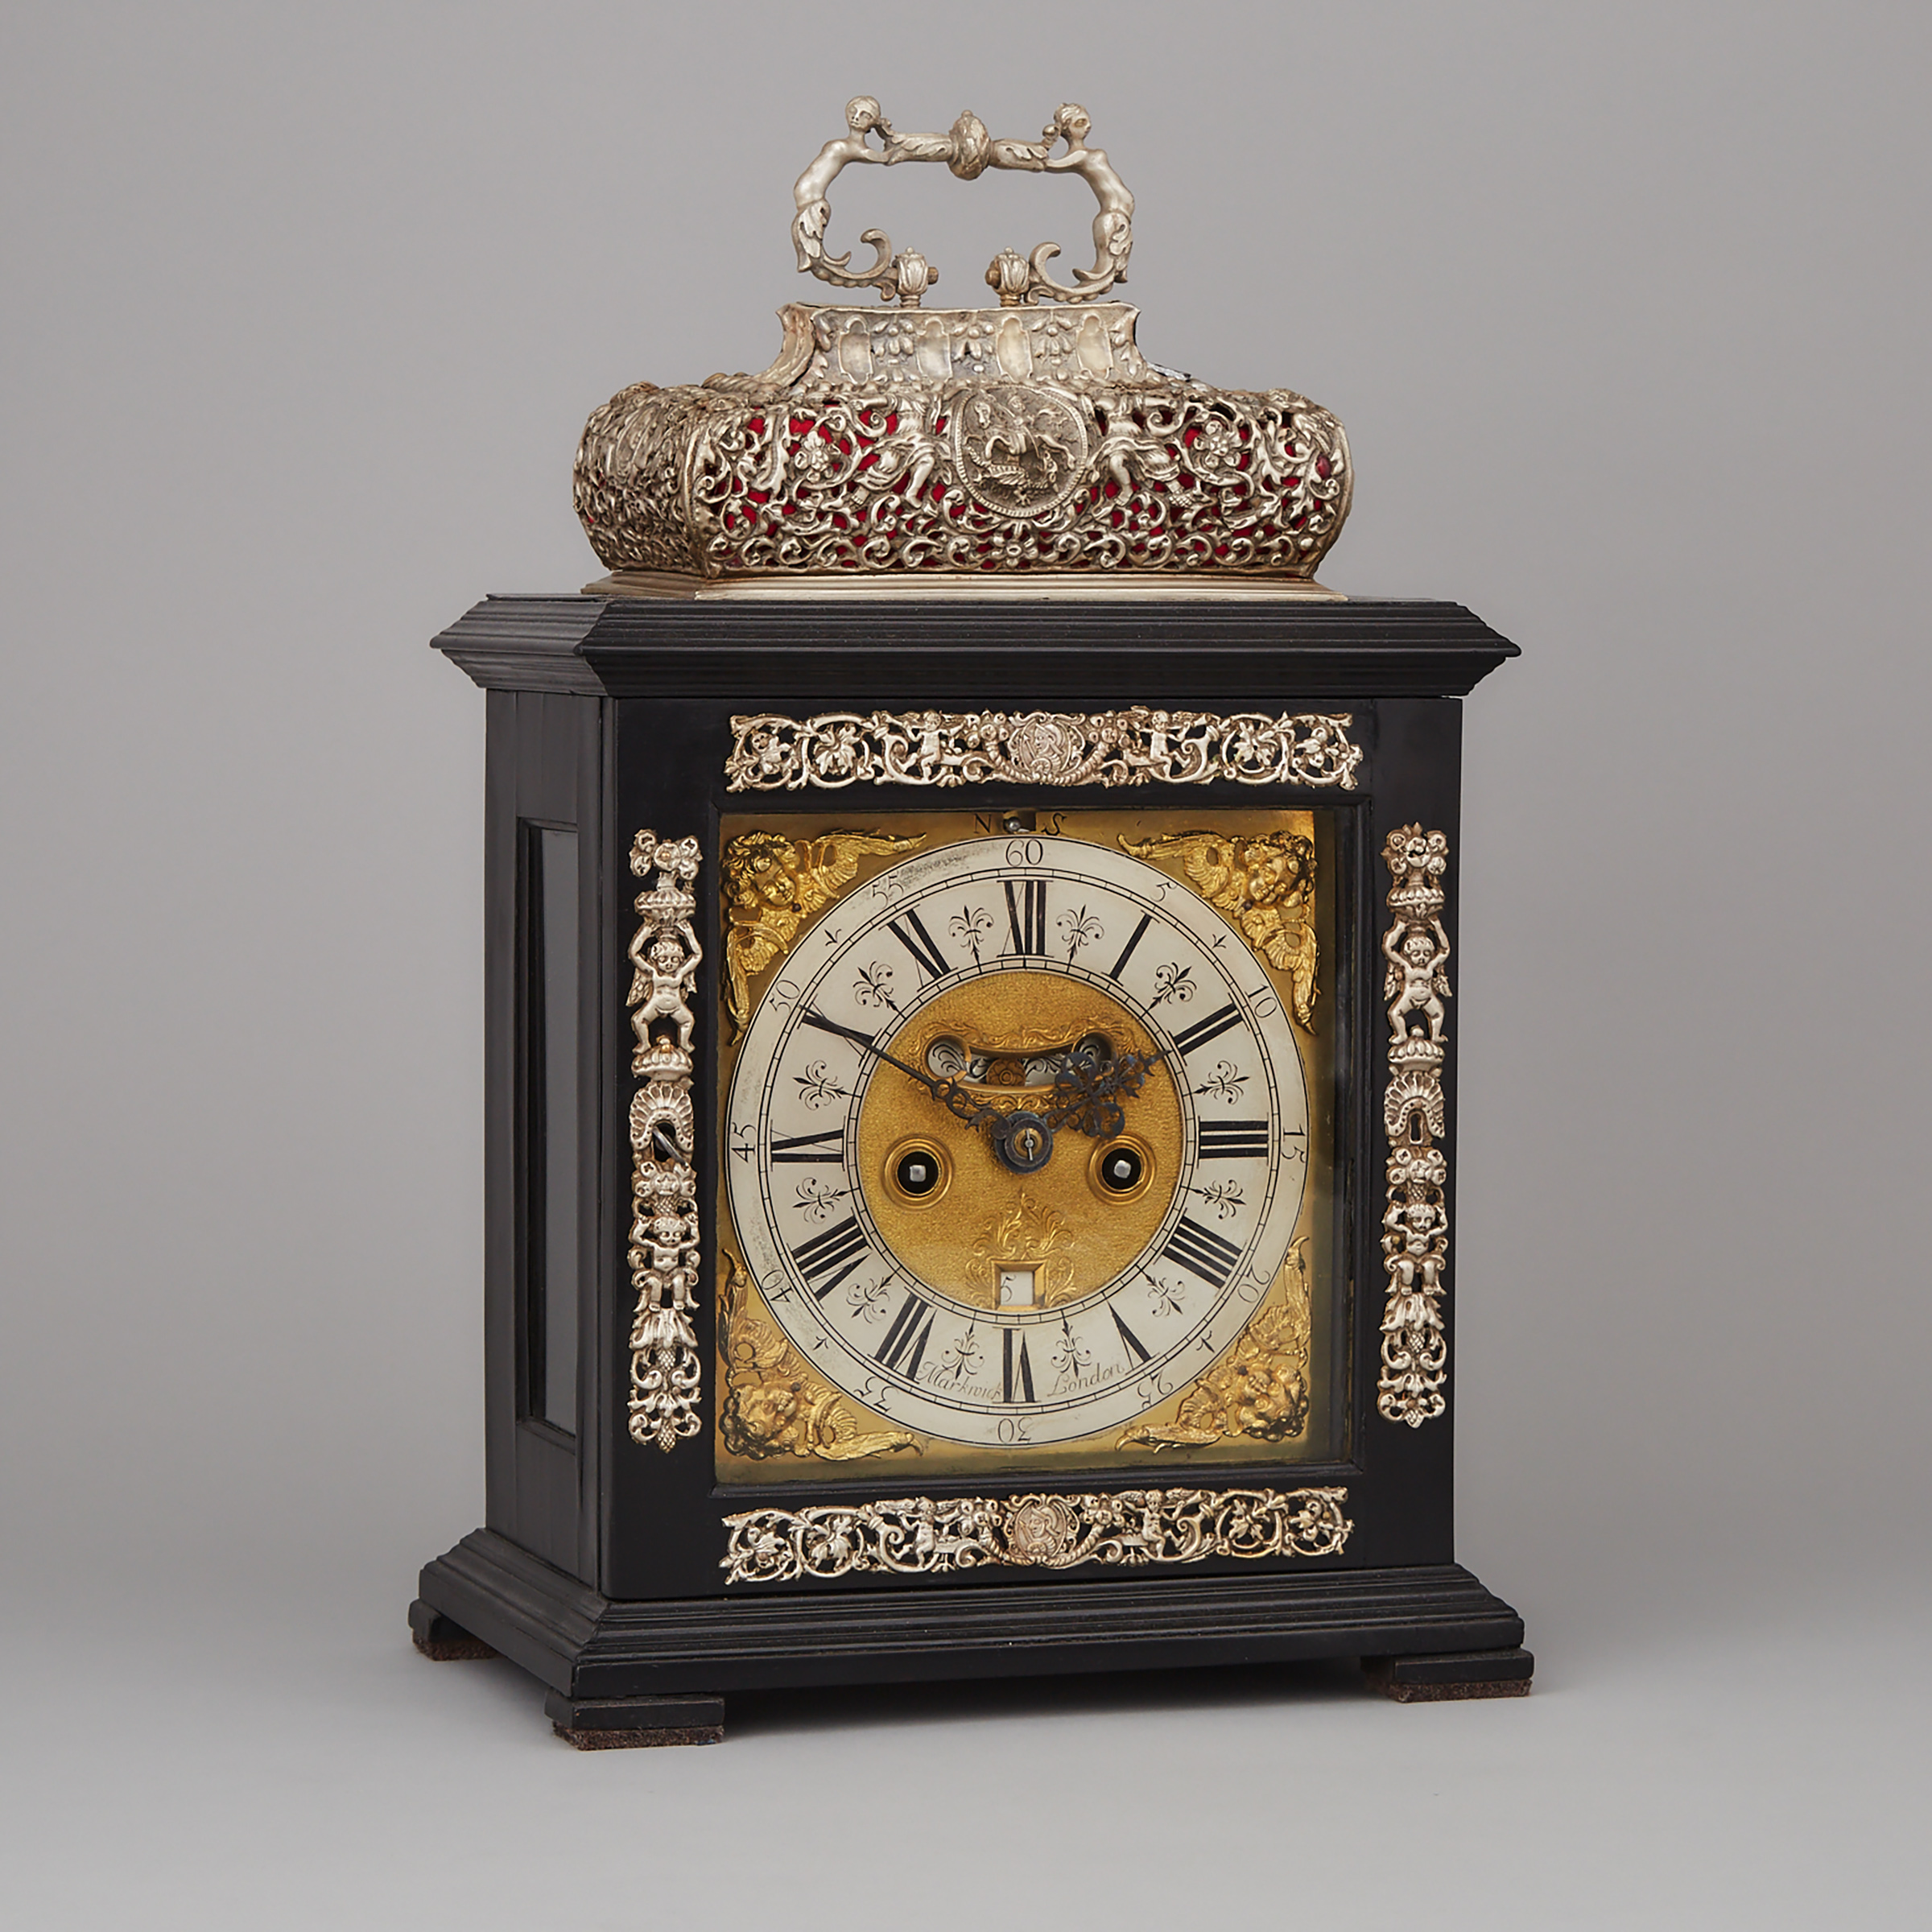 William III Basket Top Table Clock, James Marwick, London, c.1690